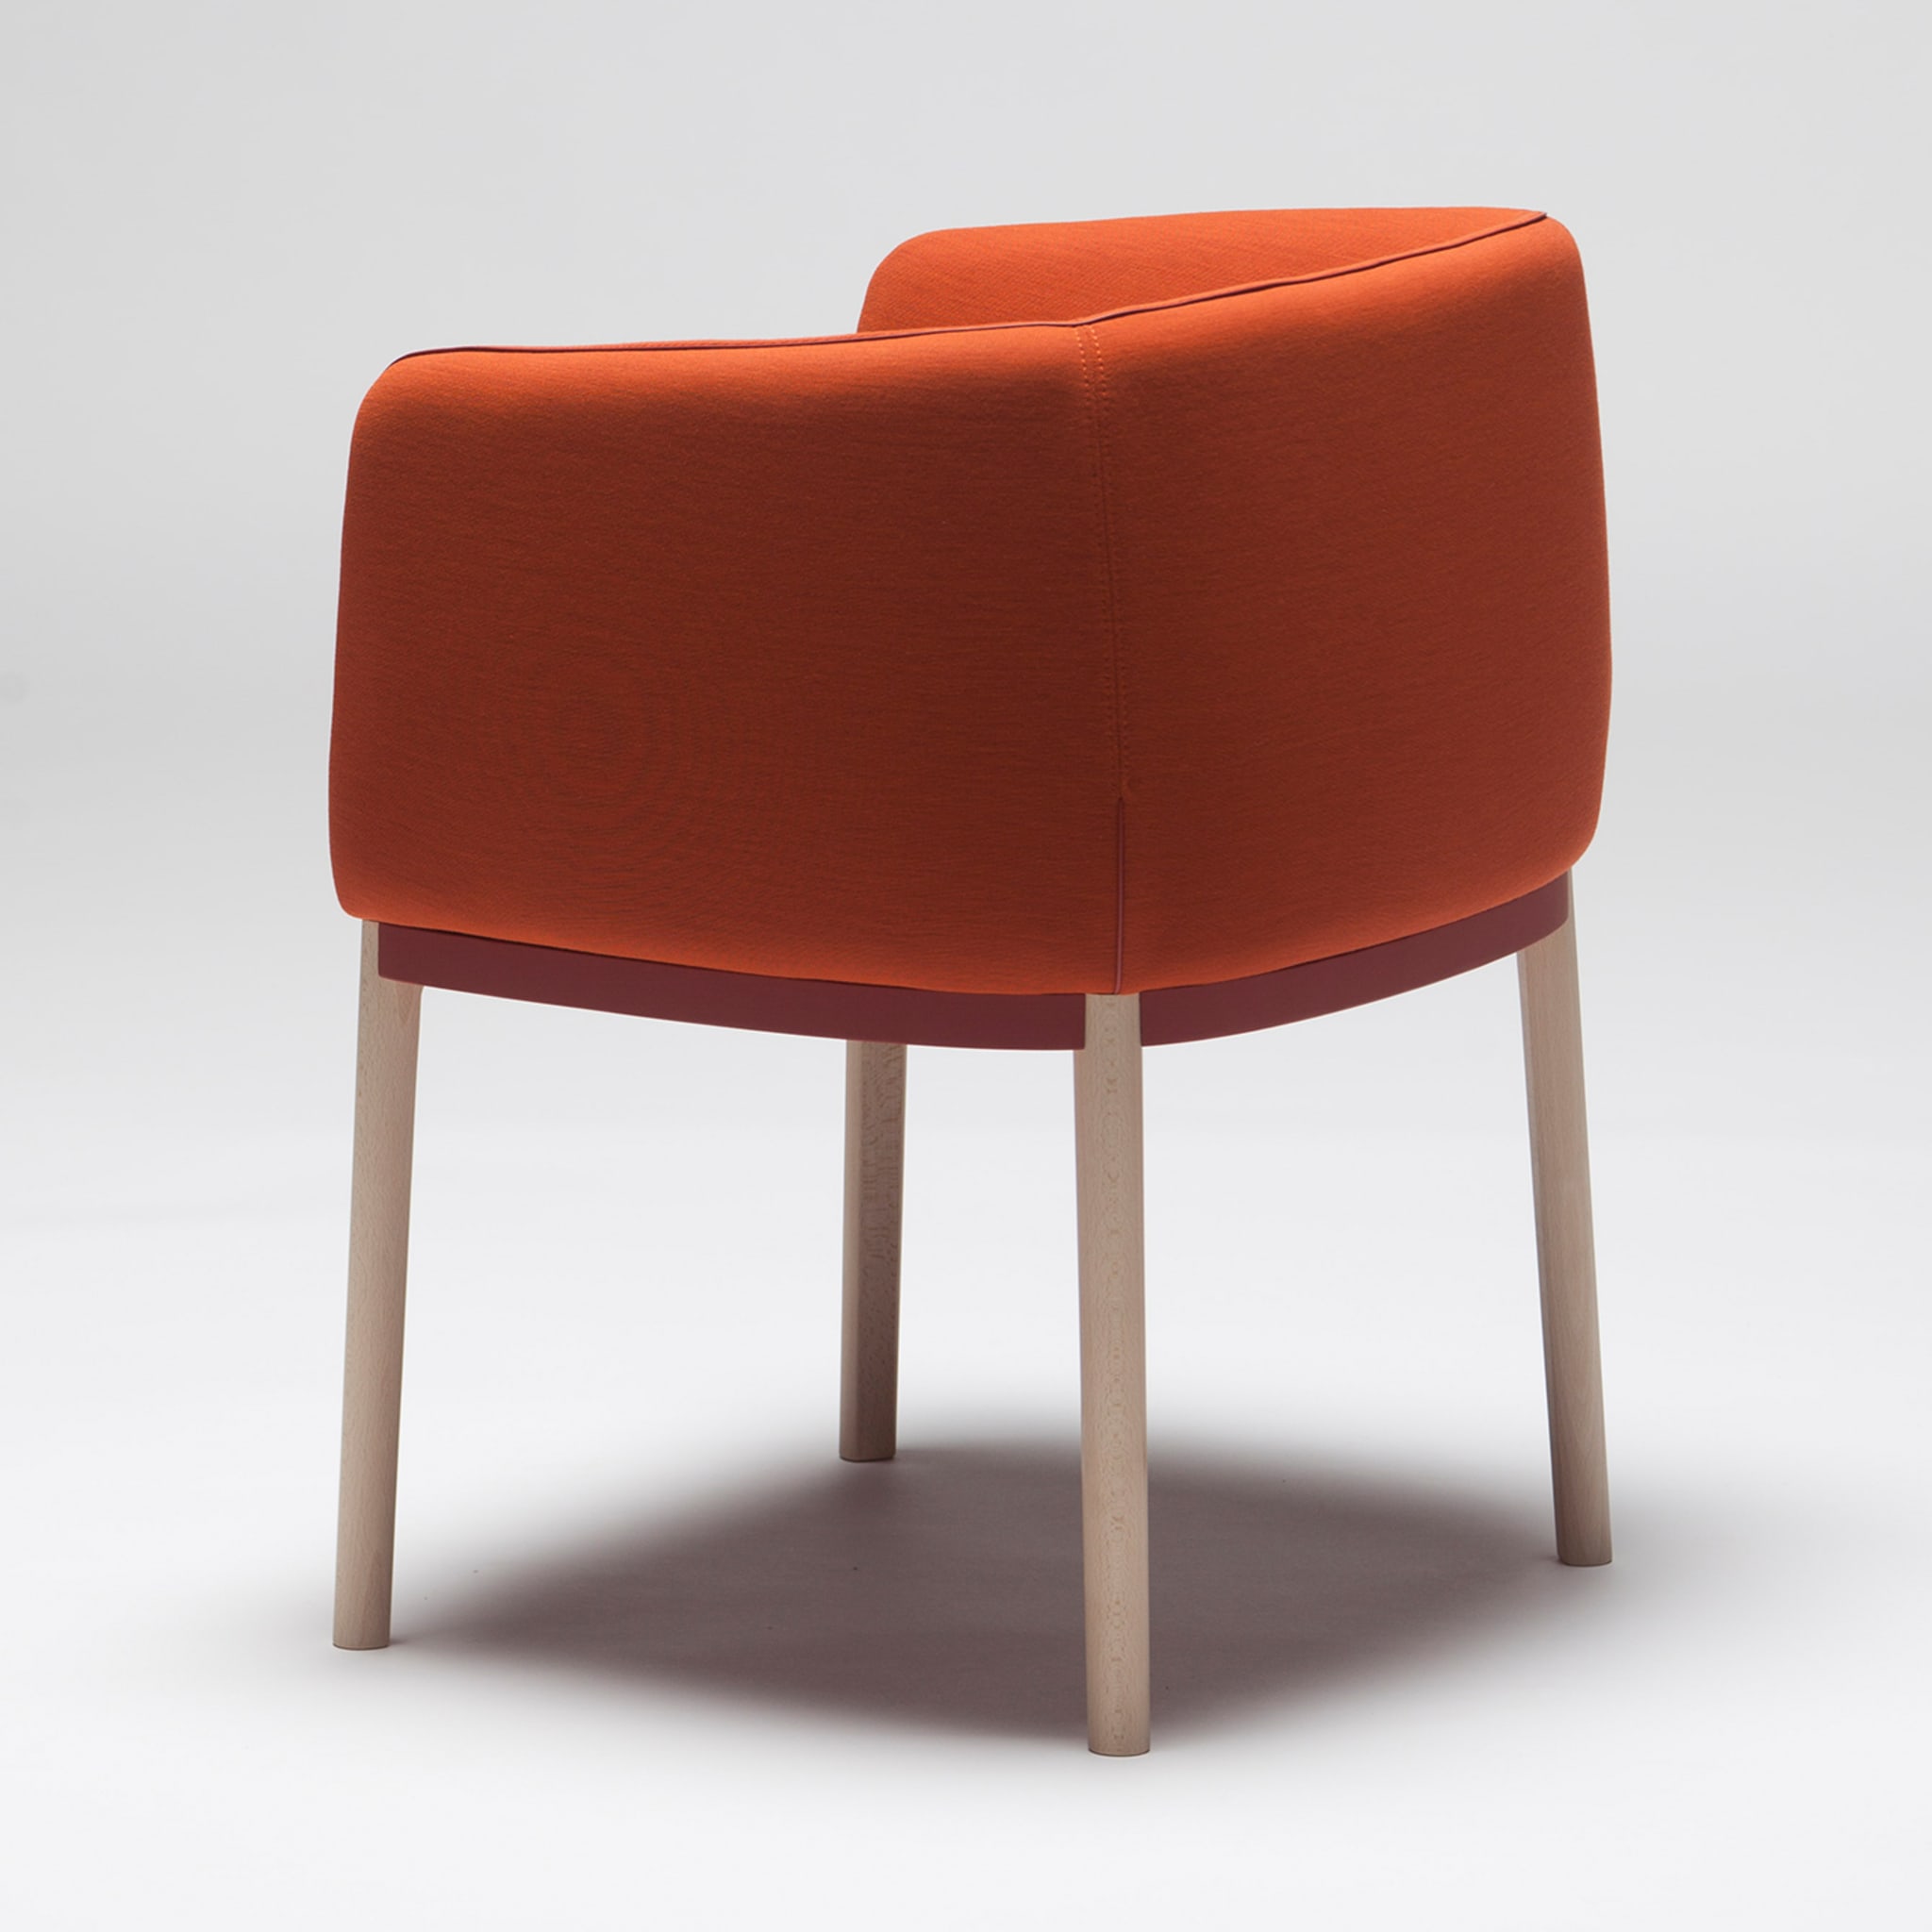 Cape 809 Orange Chair by Debiasi Sandri - Vue alternative 3